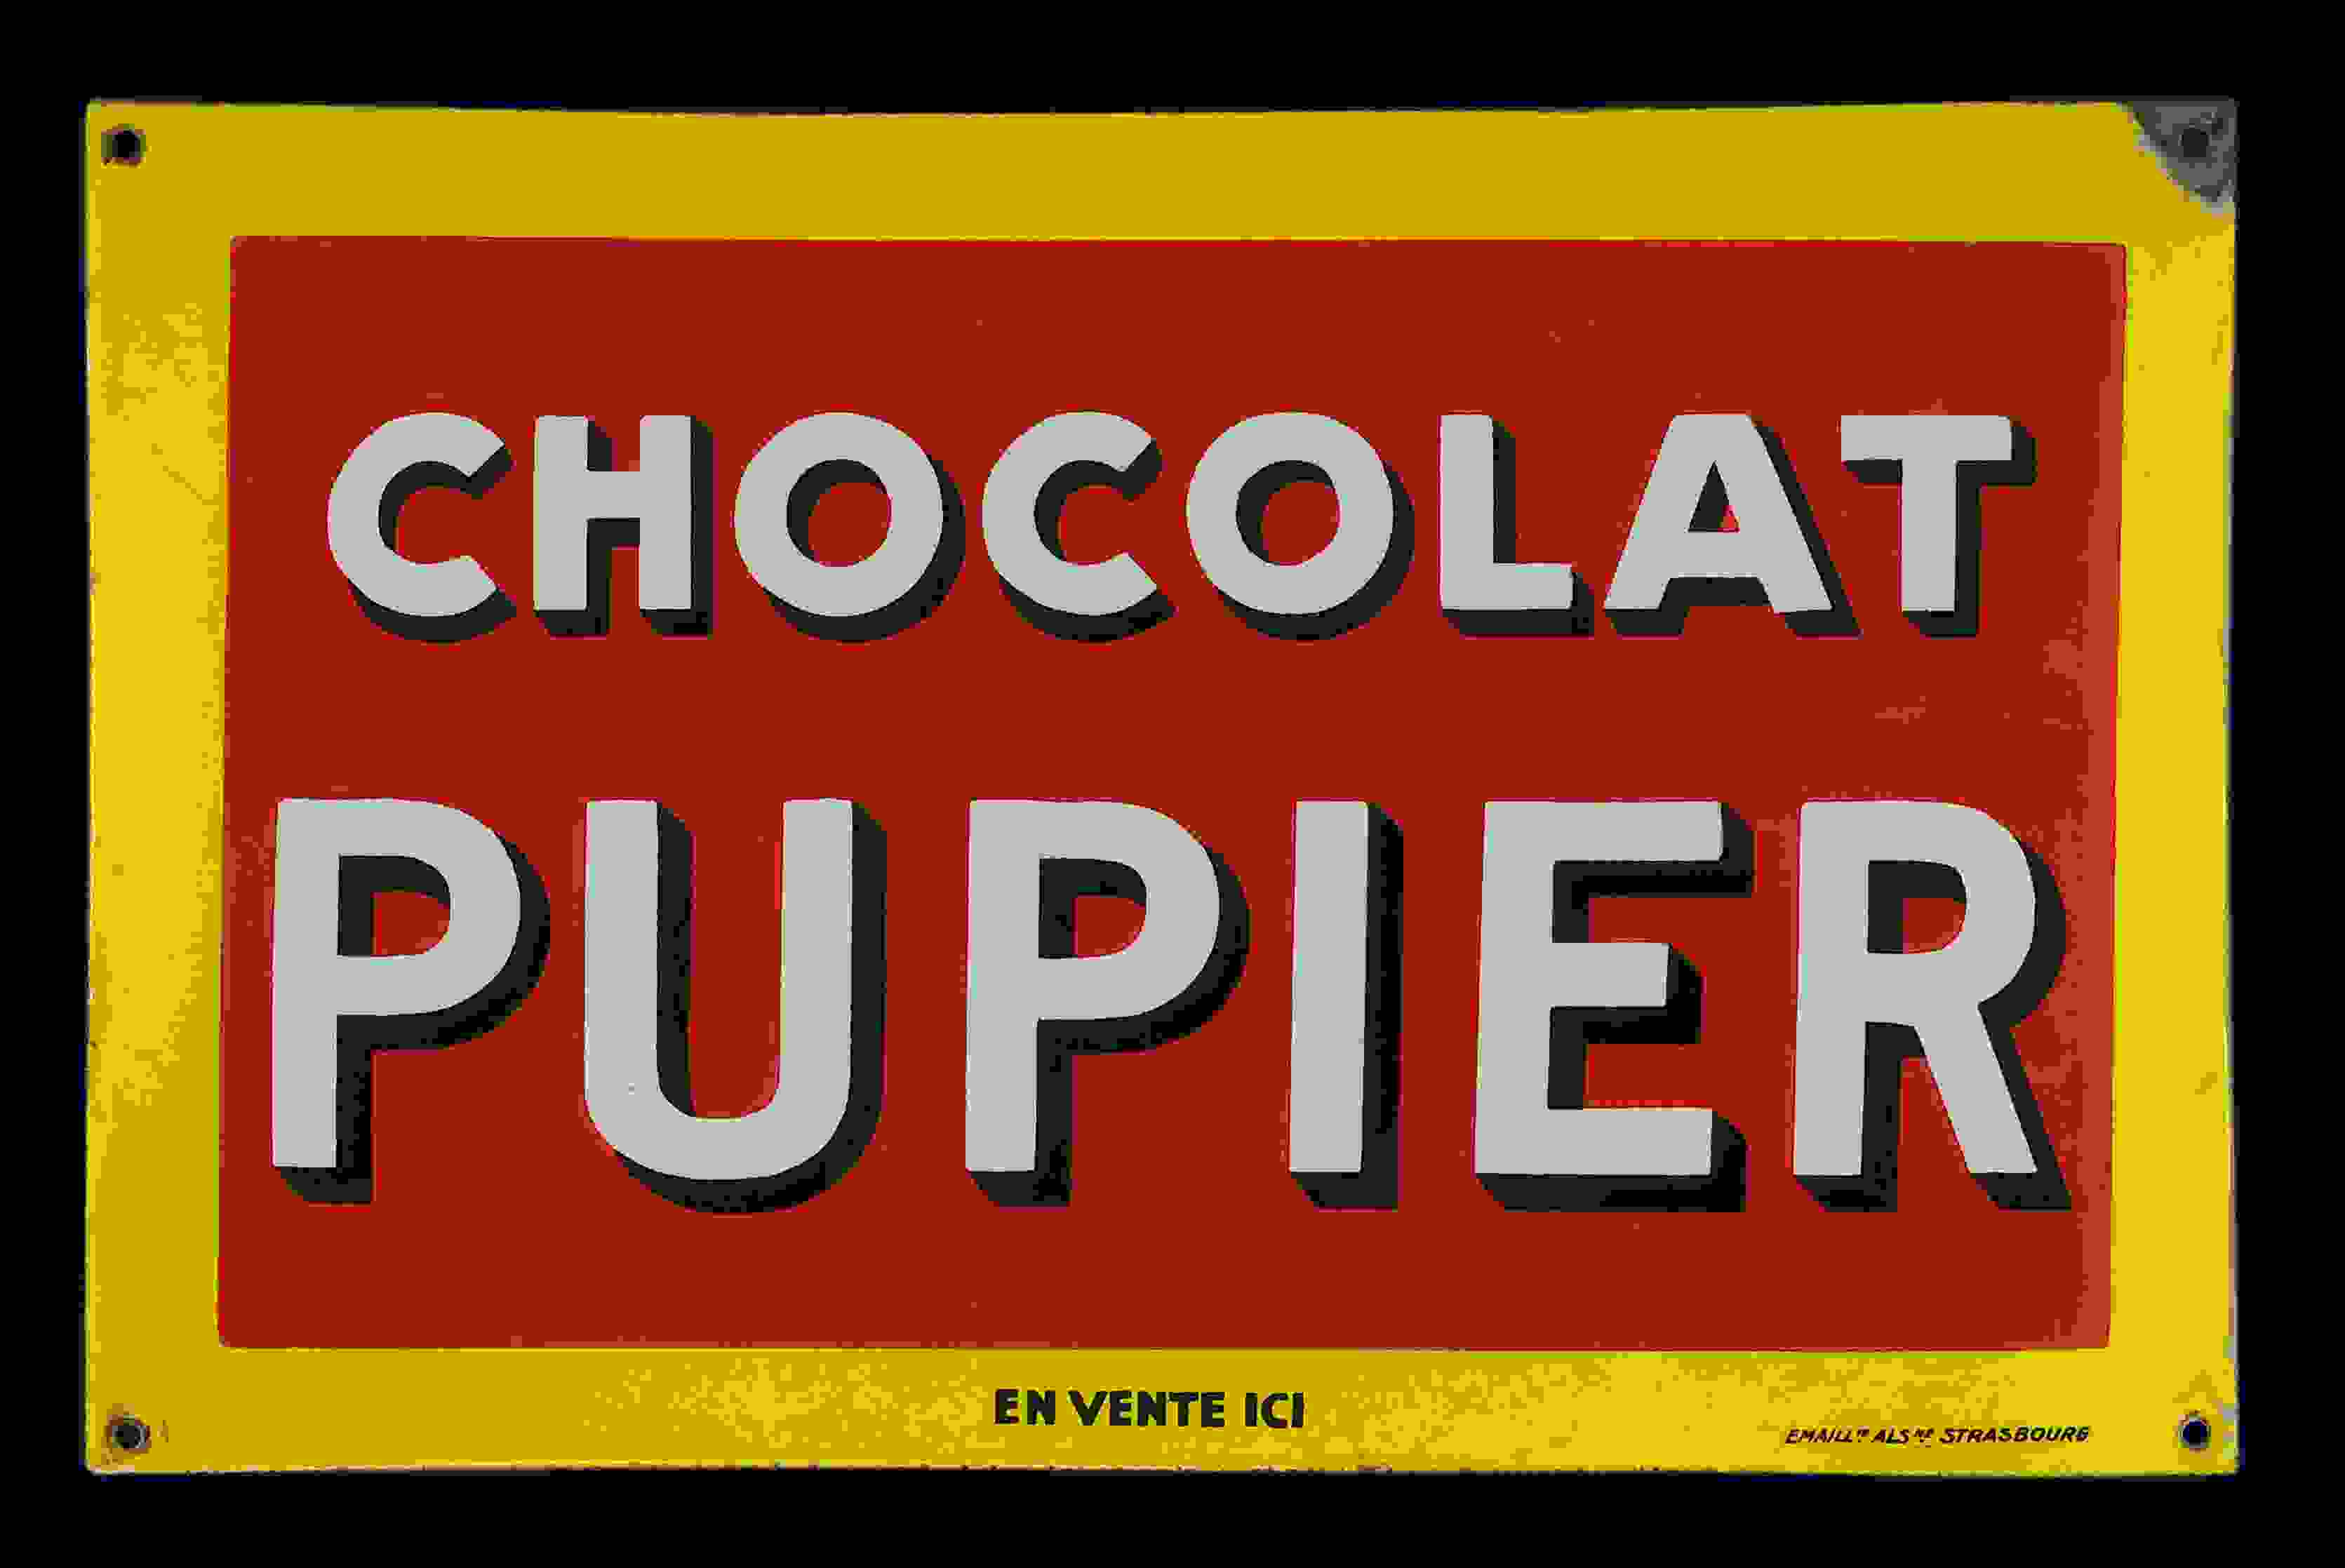 Chocolat Pupier 